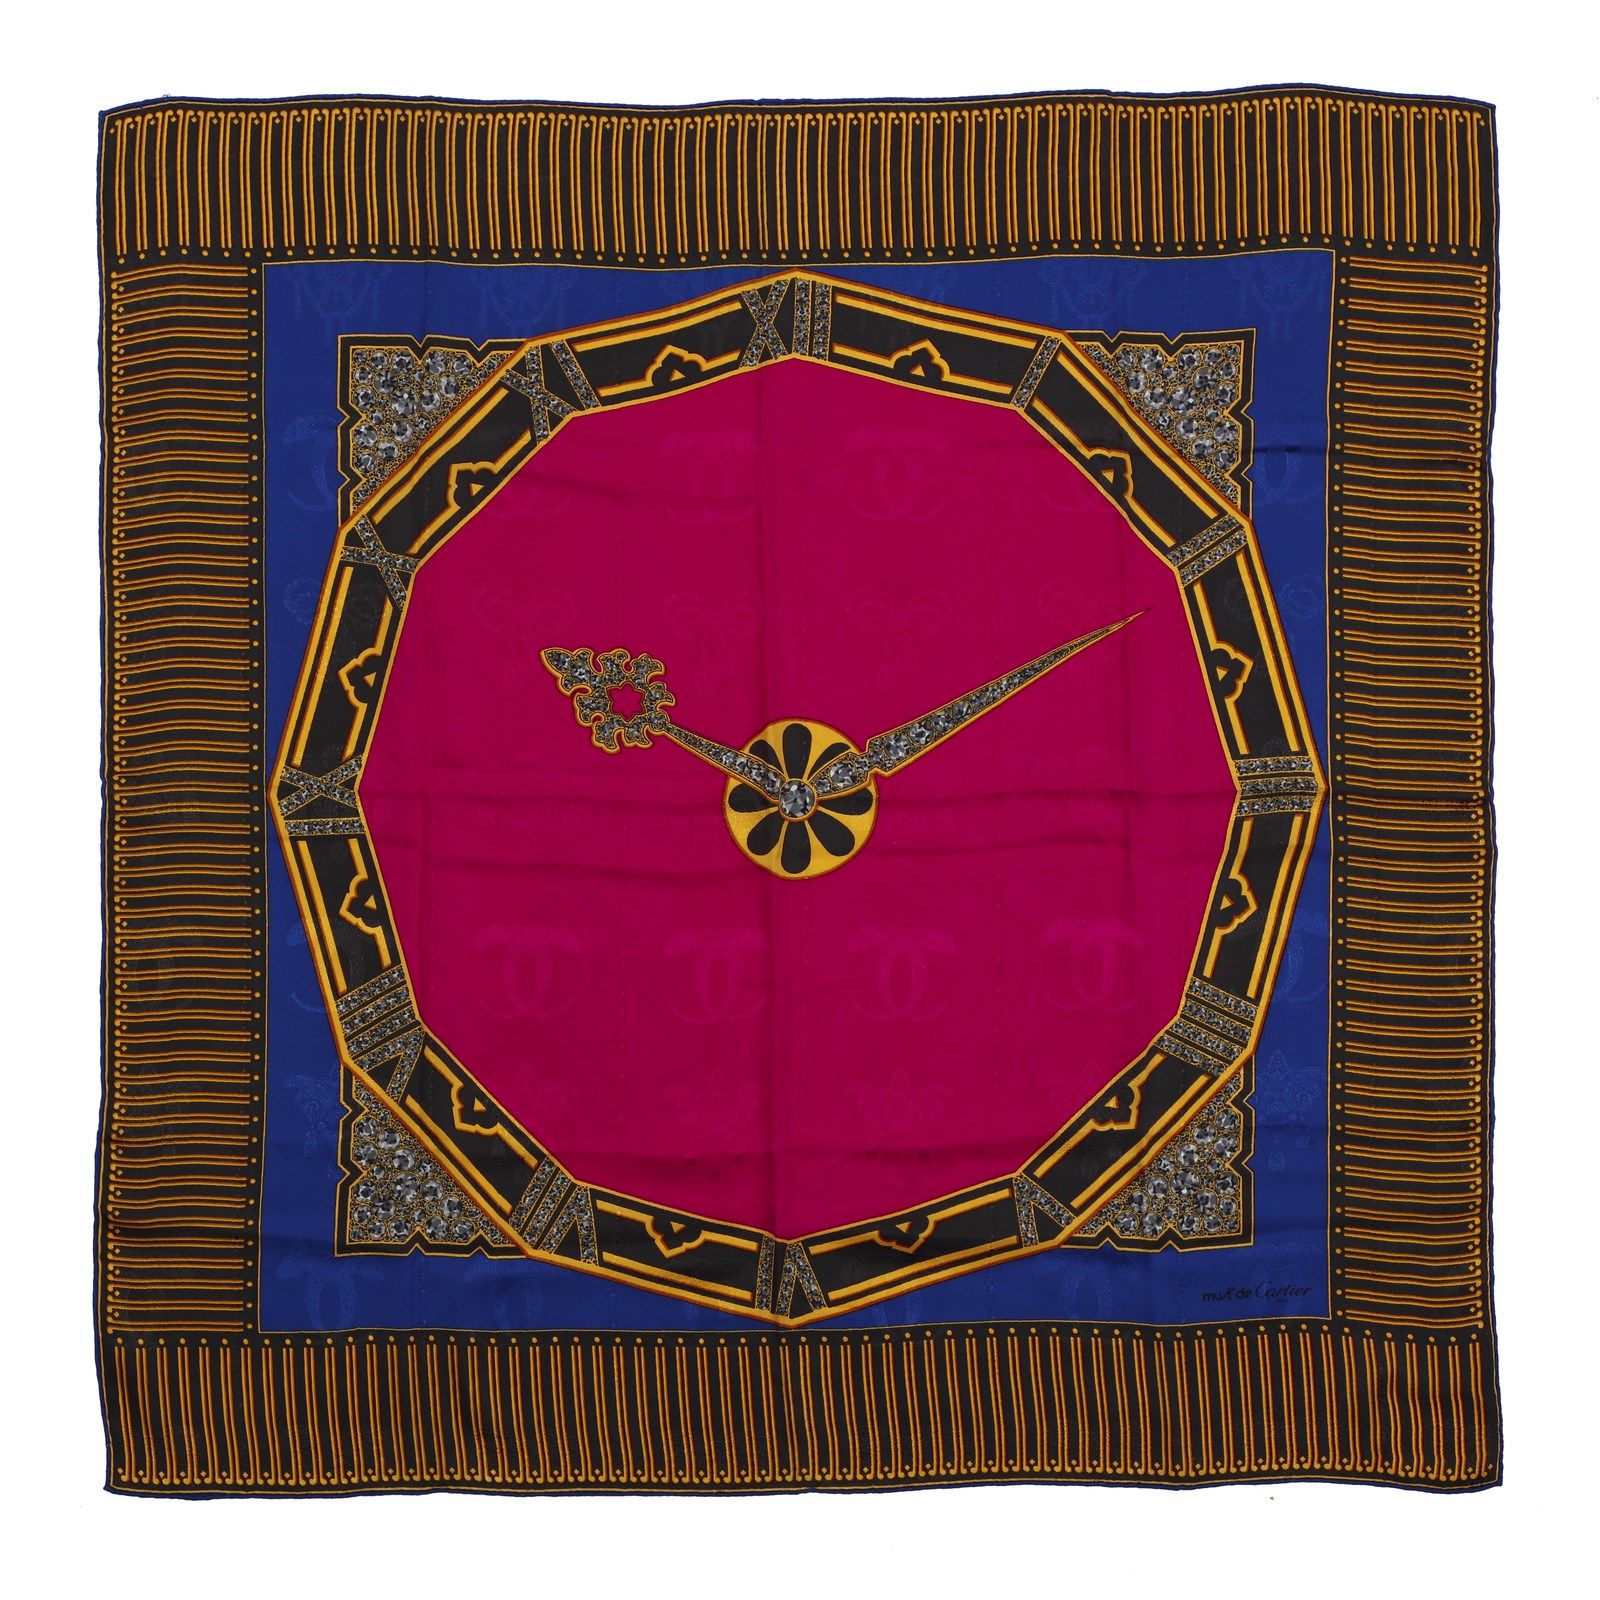 CARTIER Multicolored silk foulard. 多色丝绸围巾。丝质。厘米84,00 x 84,00。完美的状态。